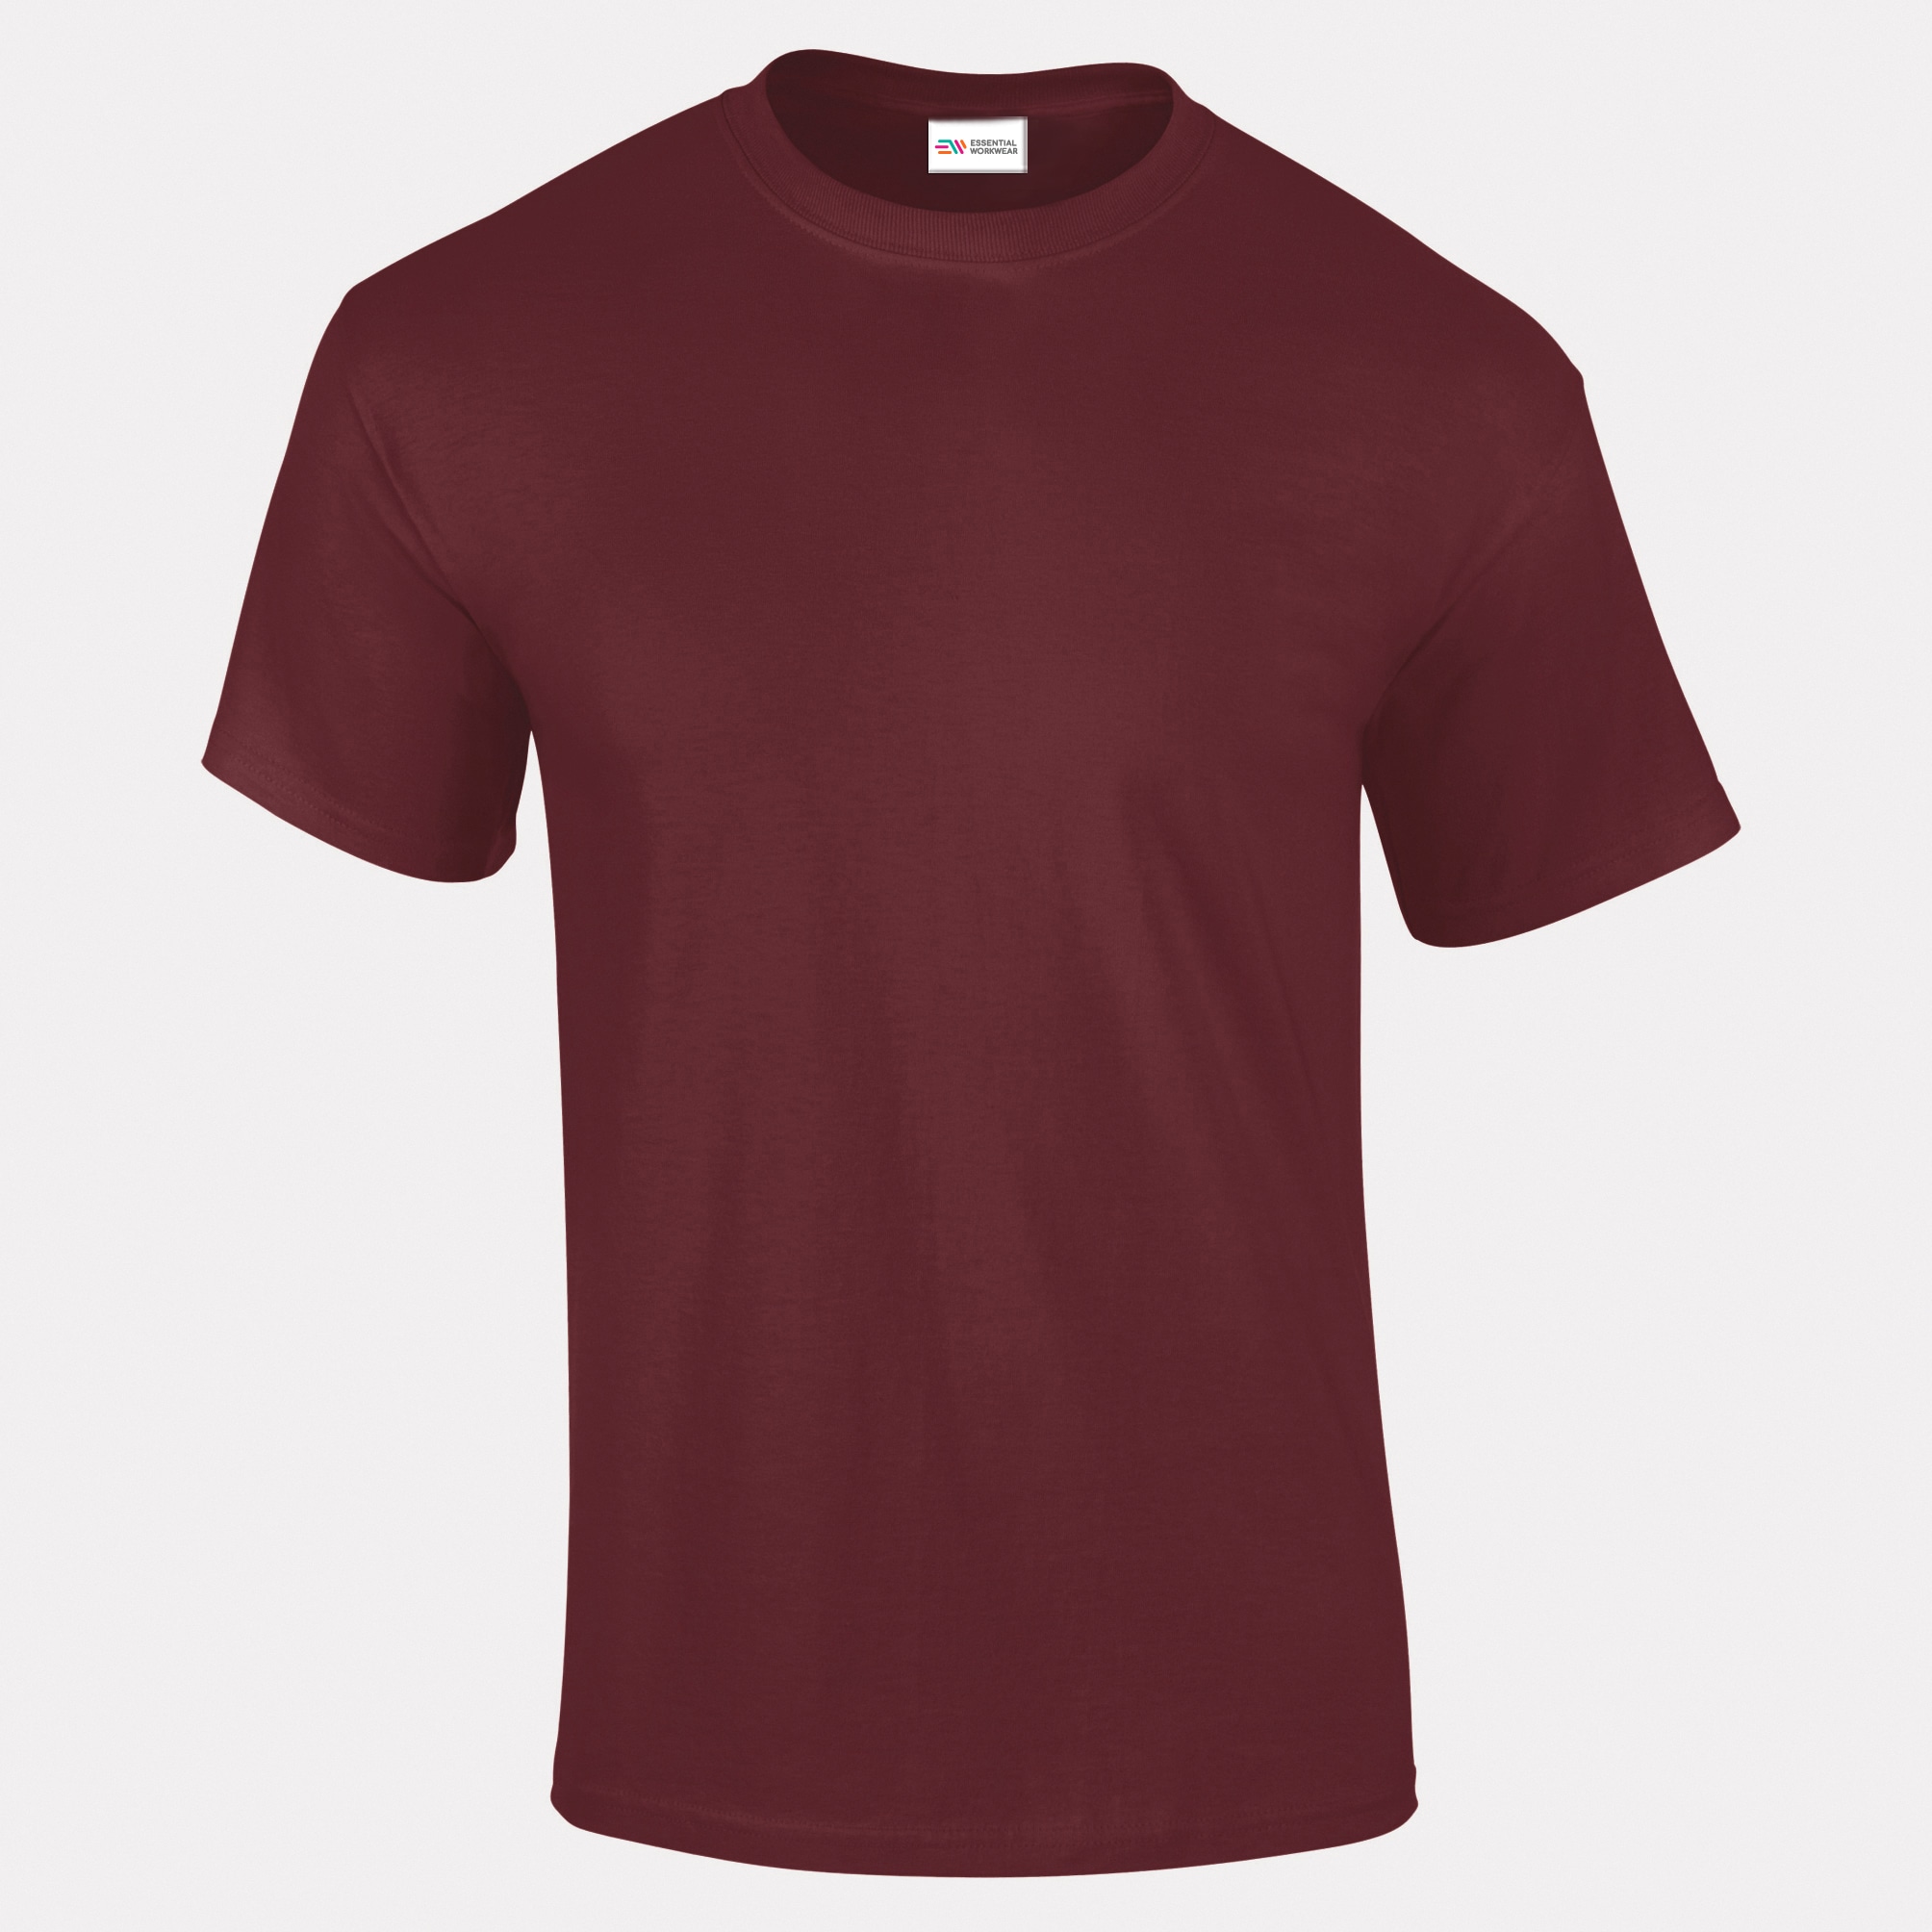 Essential Workwear Unisex T-Shirt - Essential Workwear